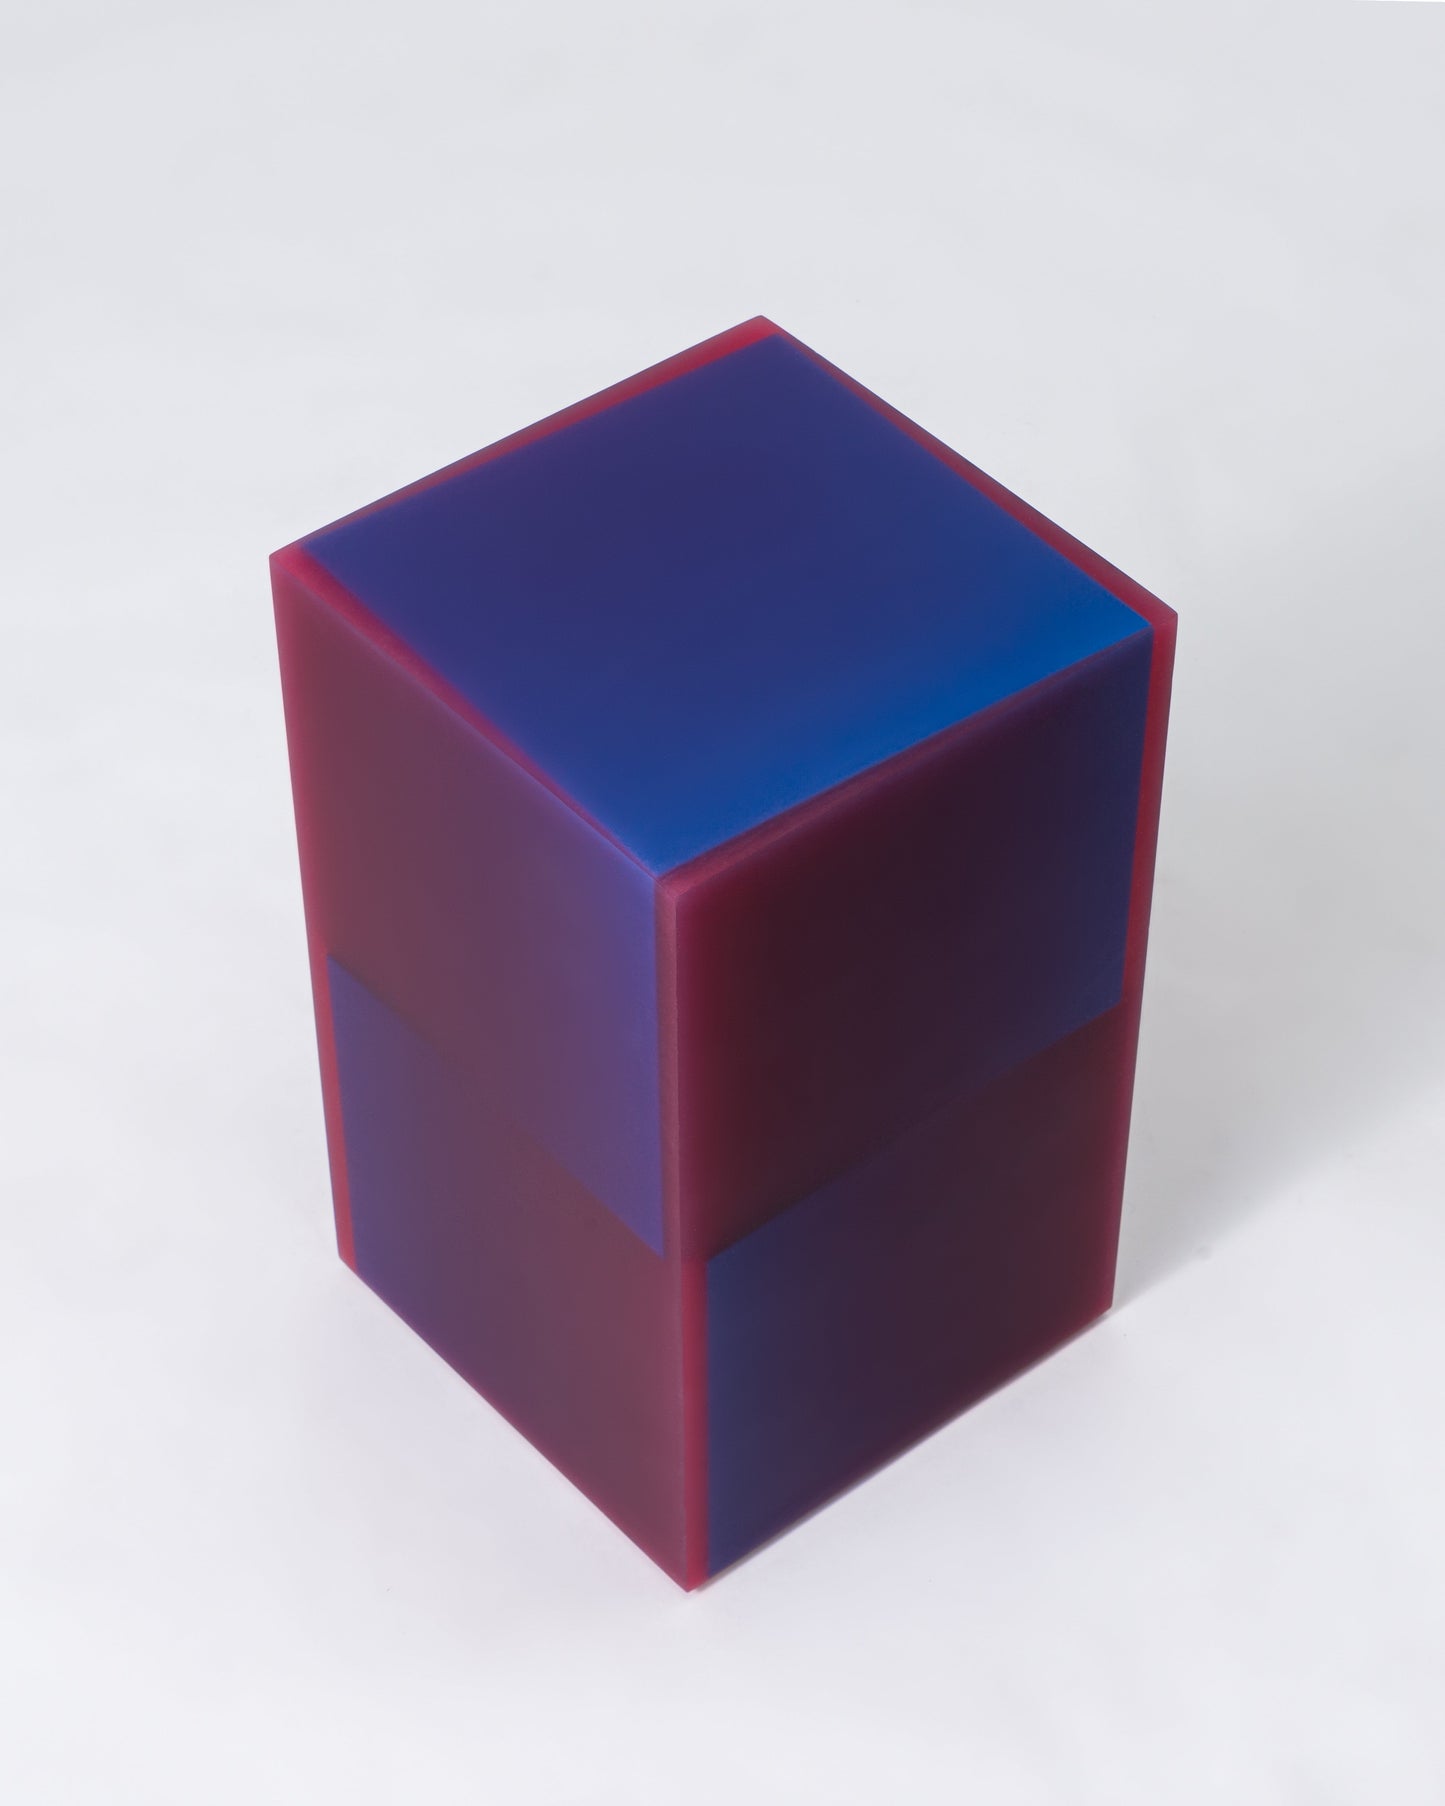 2-Way Shift Box in Red/Purple sitting facturestudio 